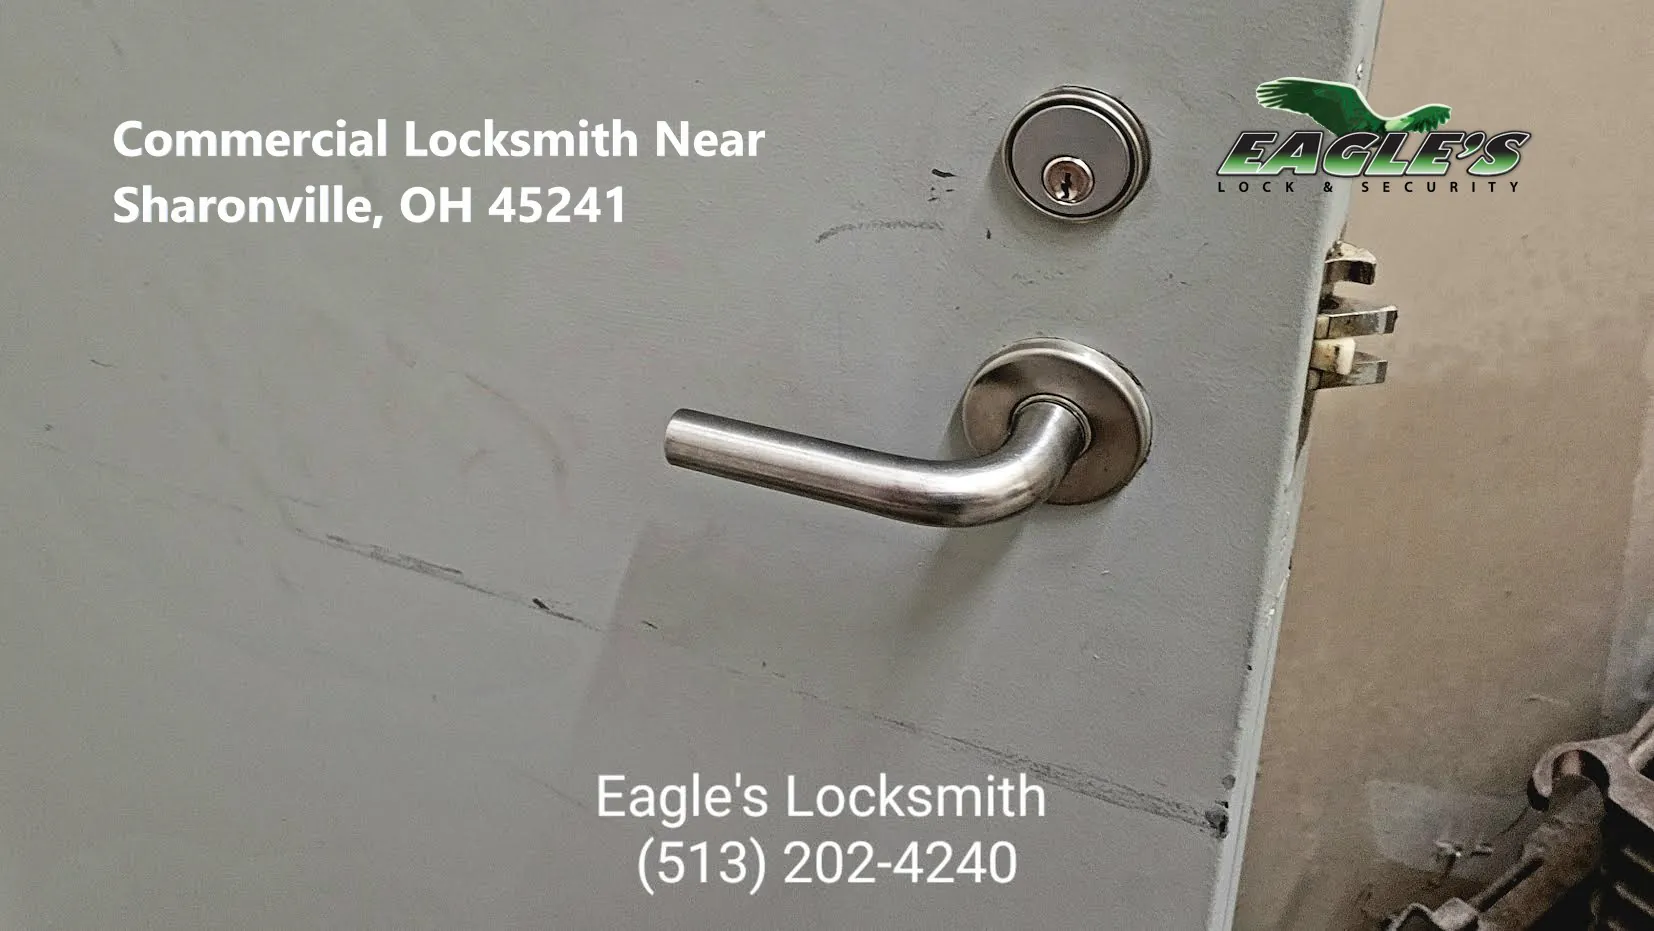 Commercial Locksmith Near Sharonville, OH 45241